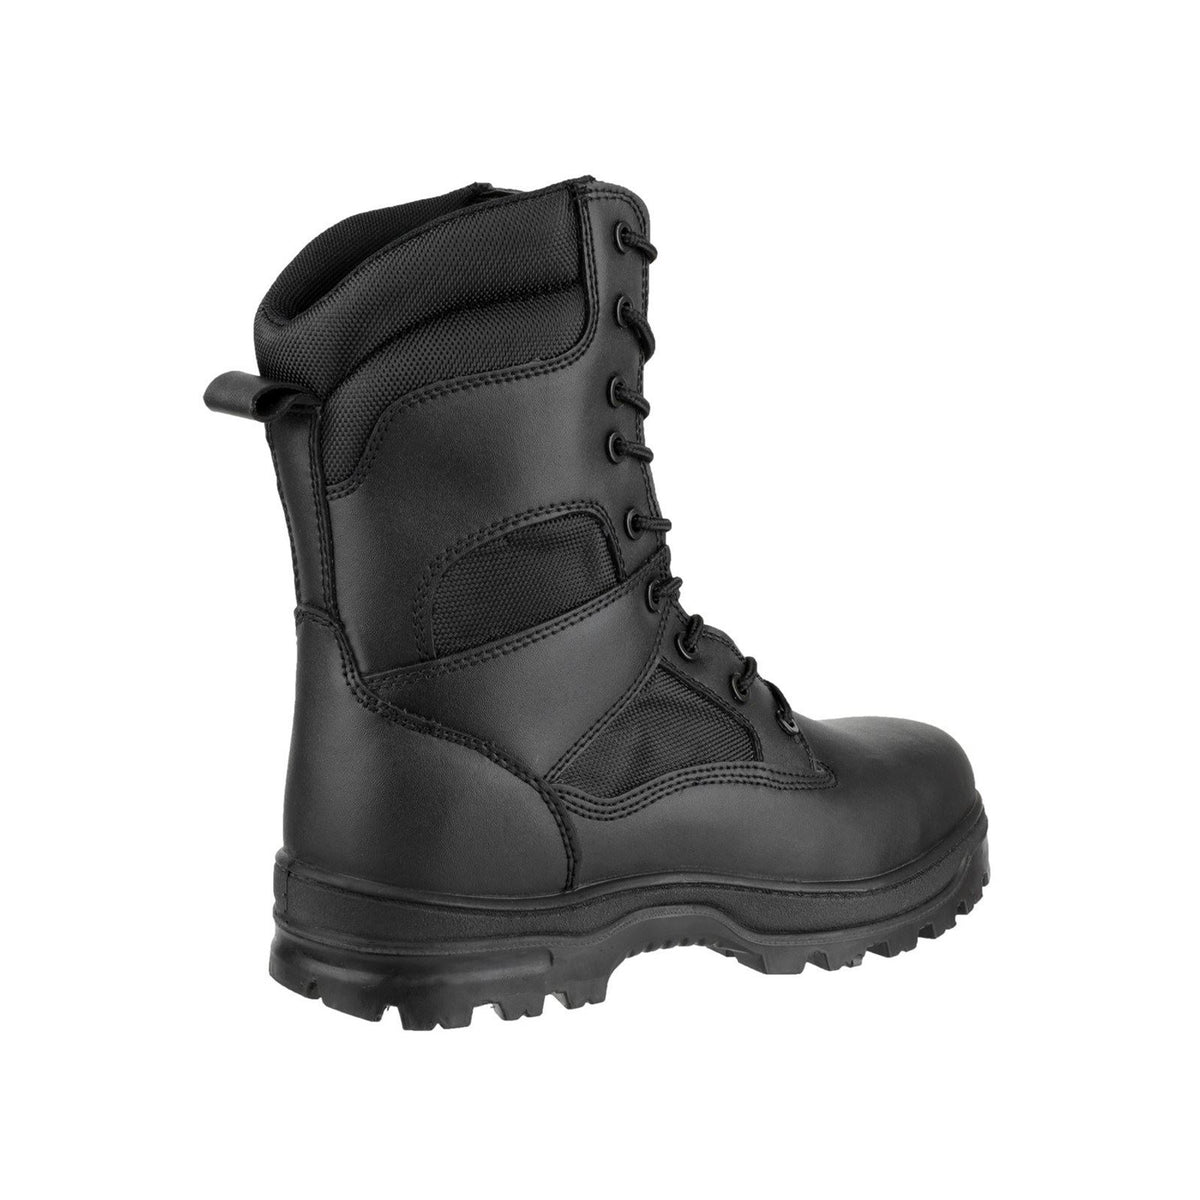 Amblers Safety FS009C Hi-leg Safety Boots